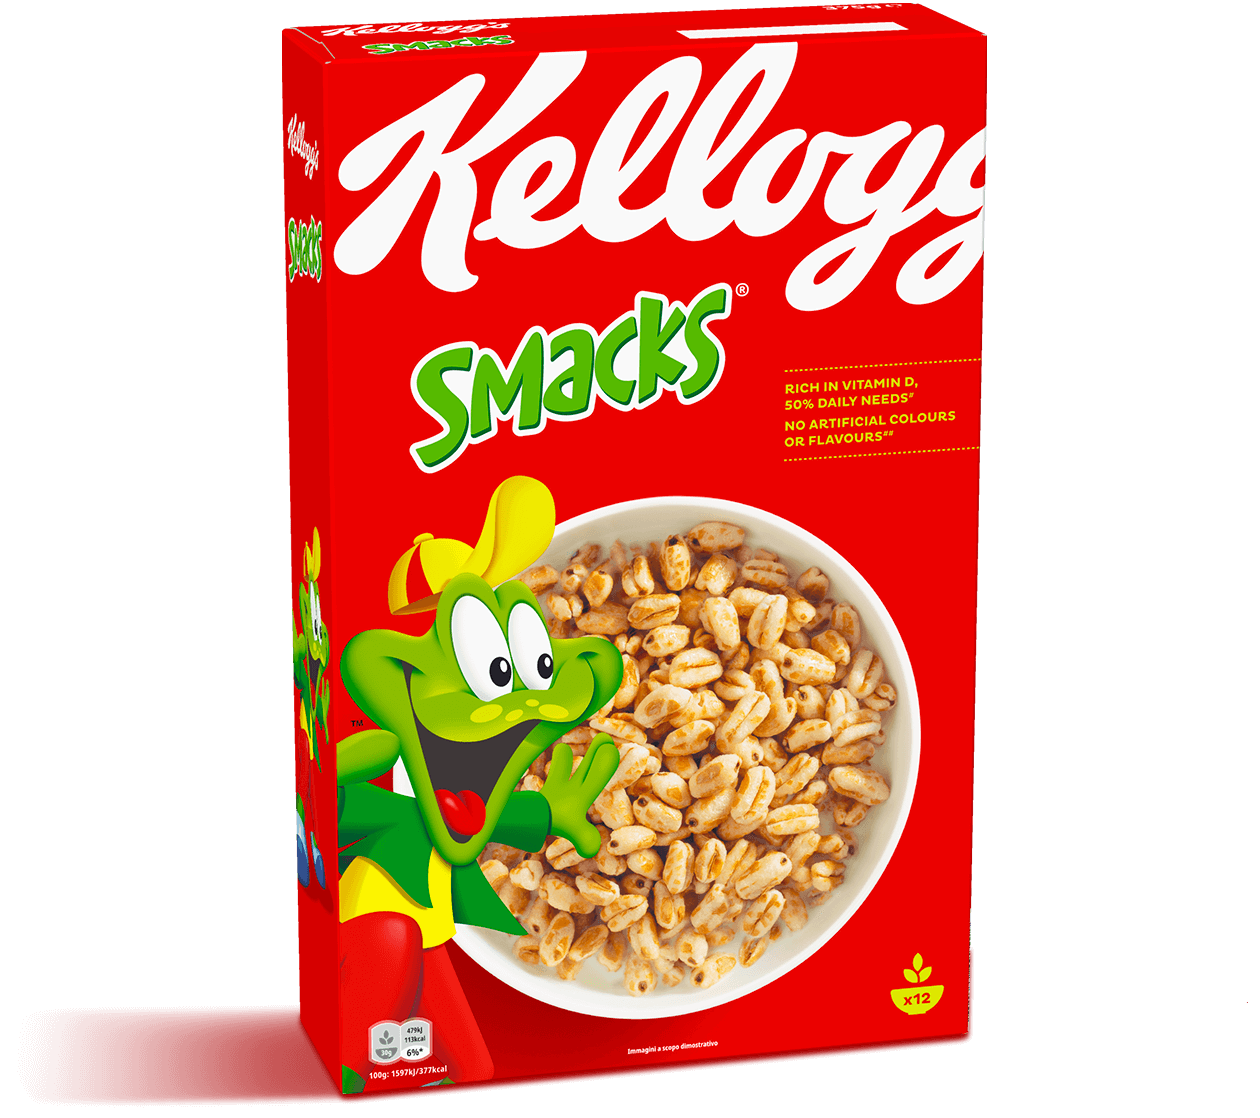 Сухой завтрак Kellogg's Smacks, 330 г